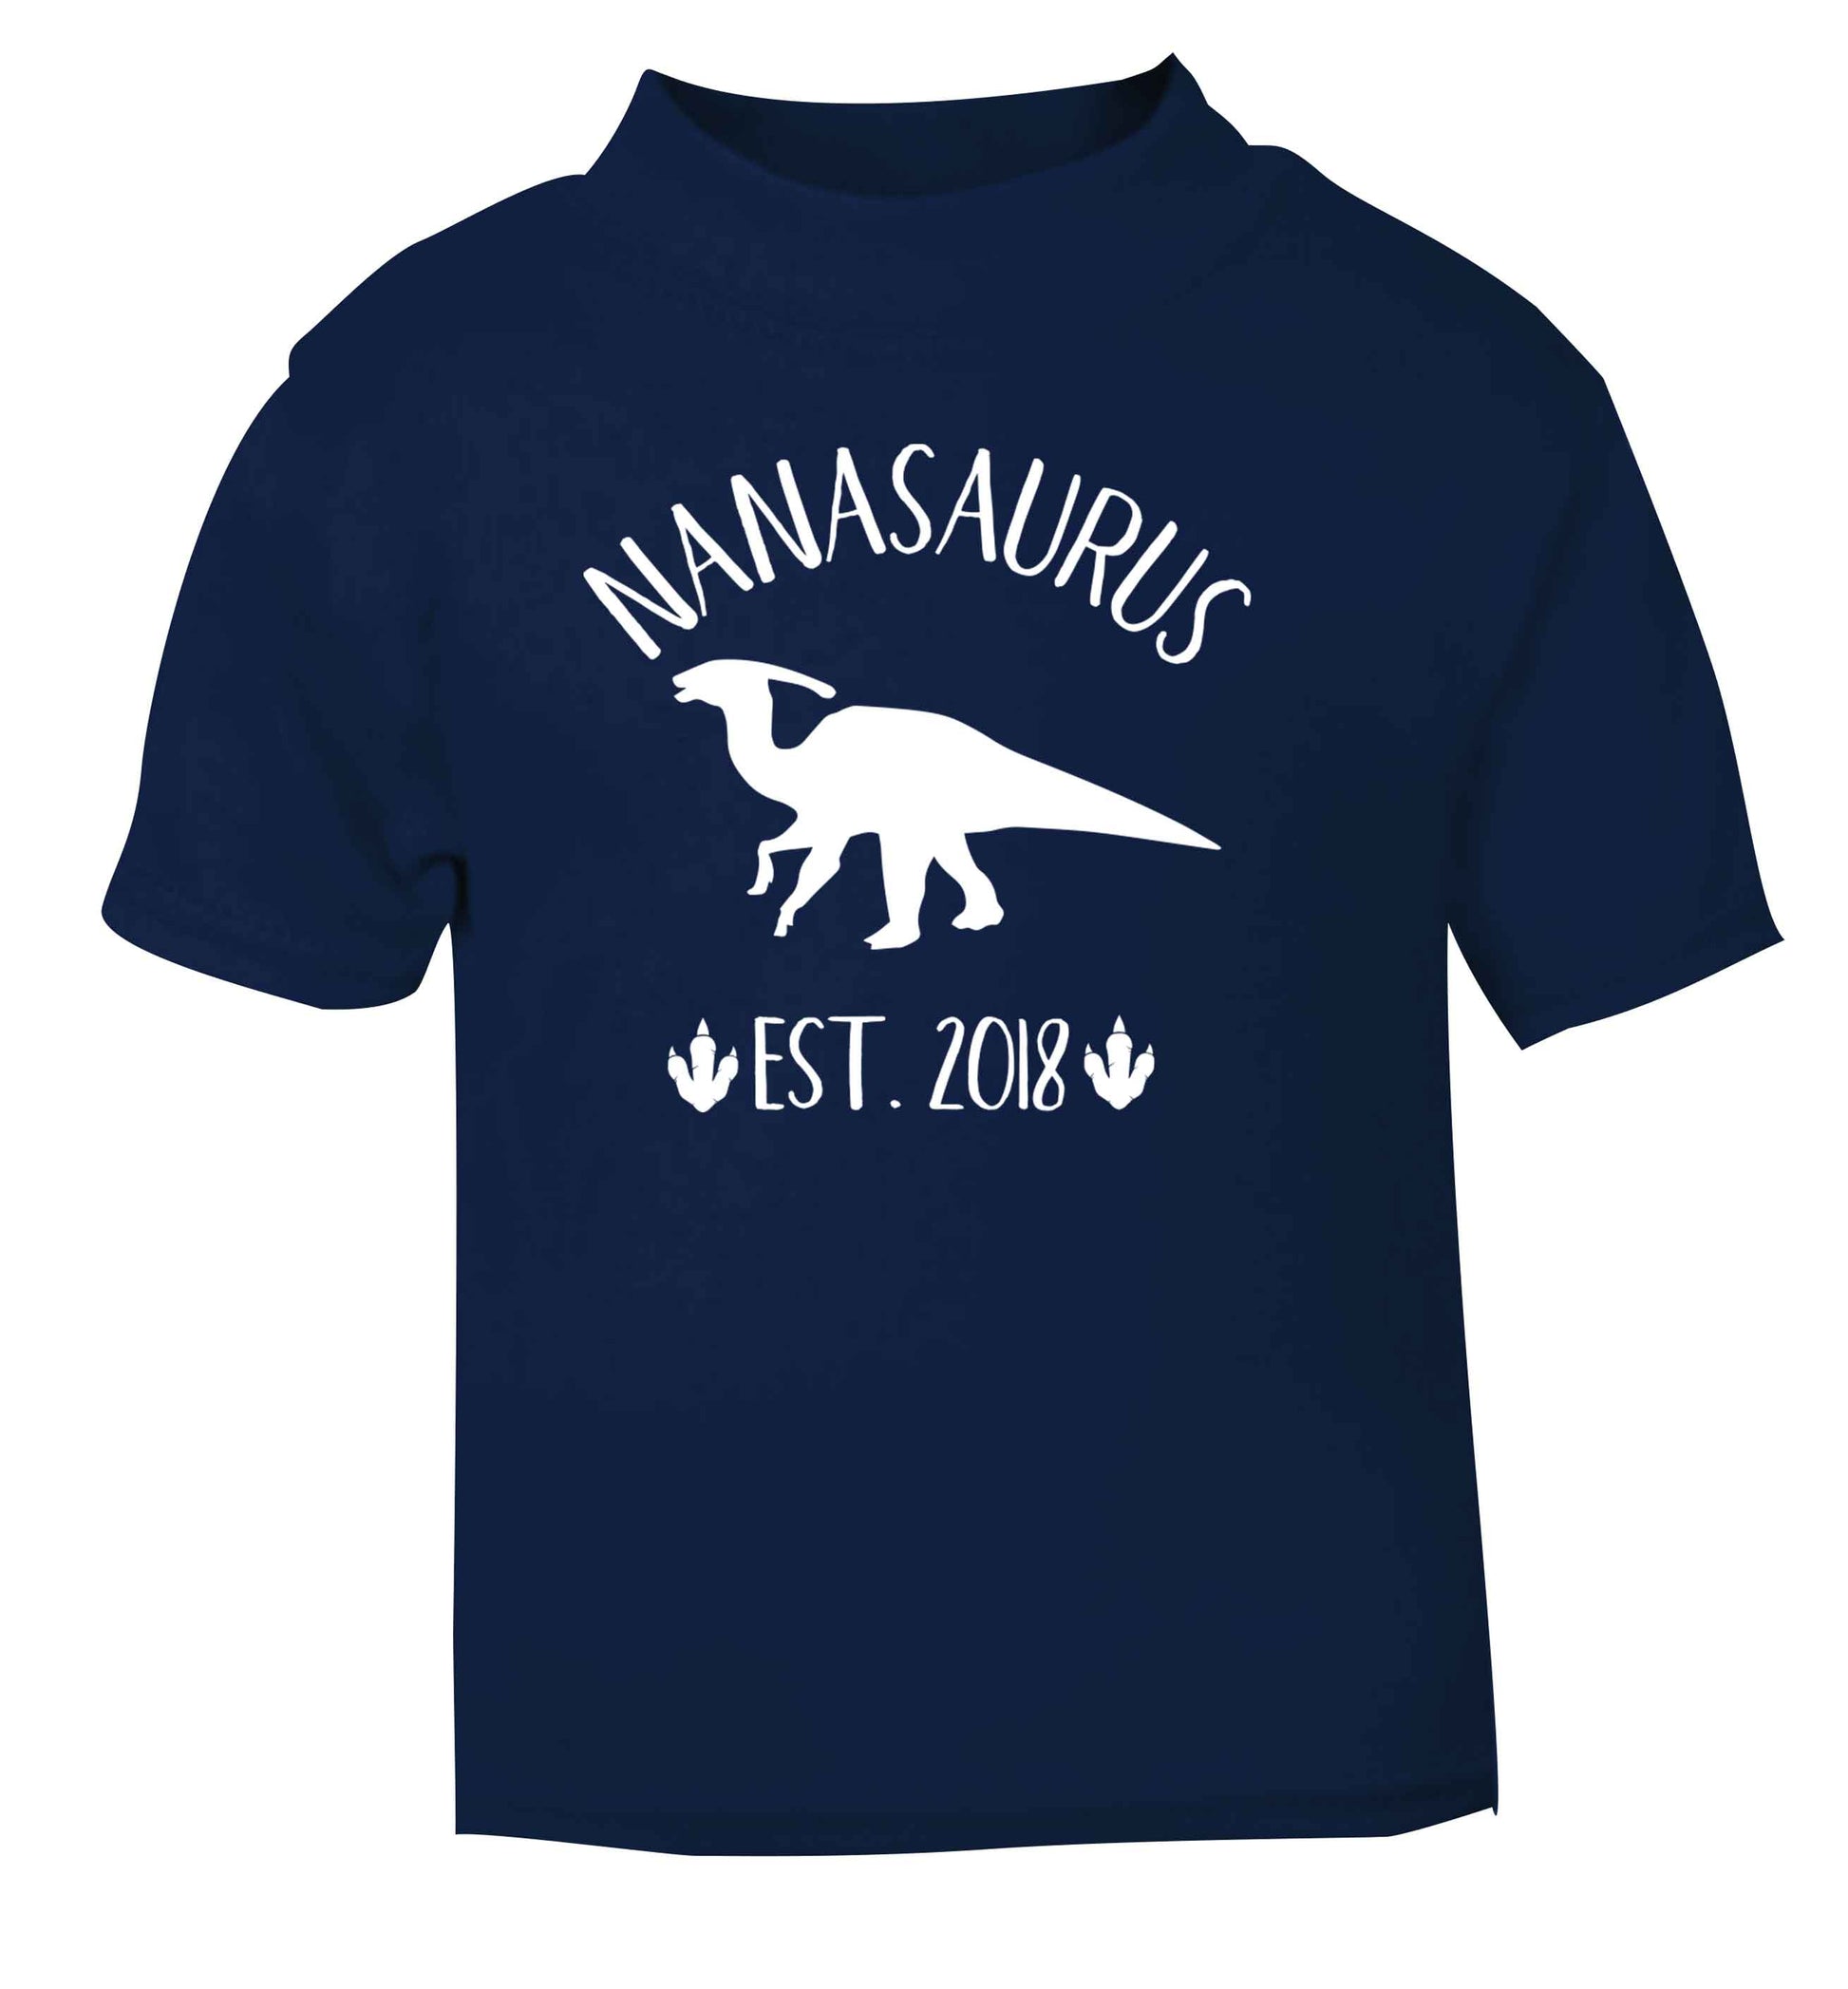 Personalised nanasaurus since (custom date) navy Baby Toddler Tshirt 2 Years